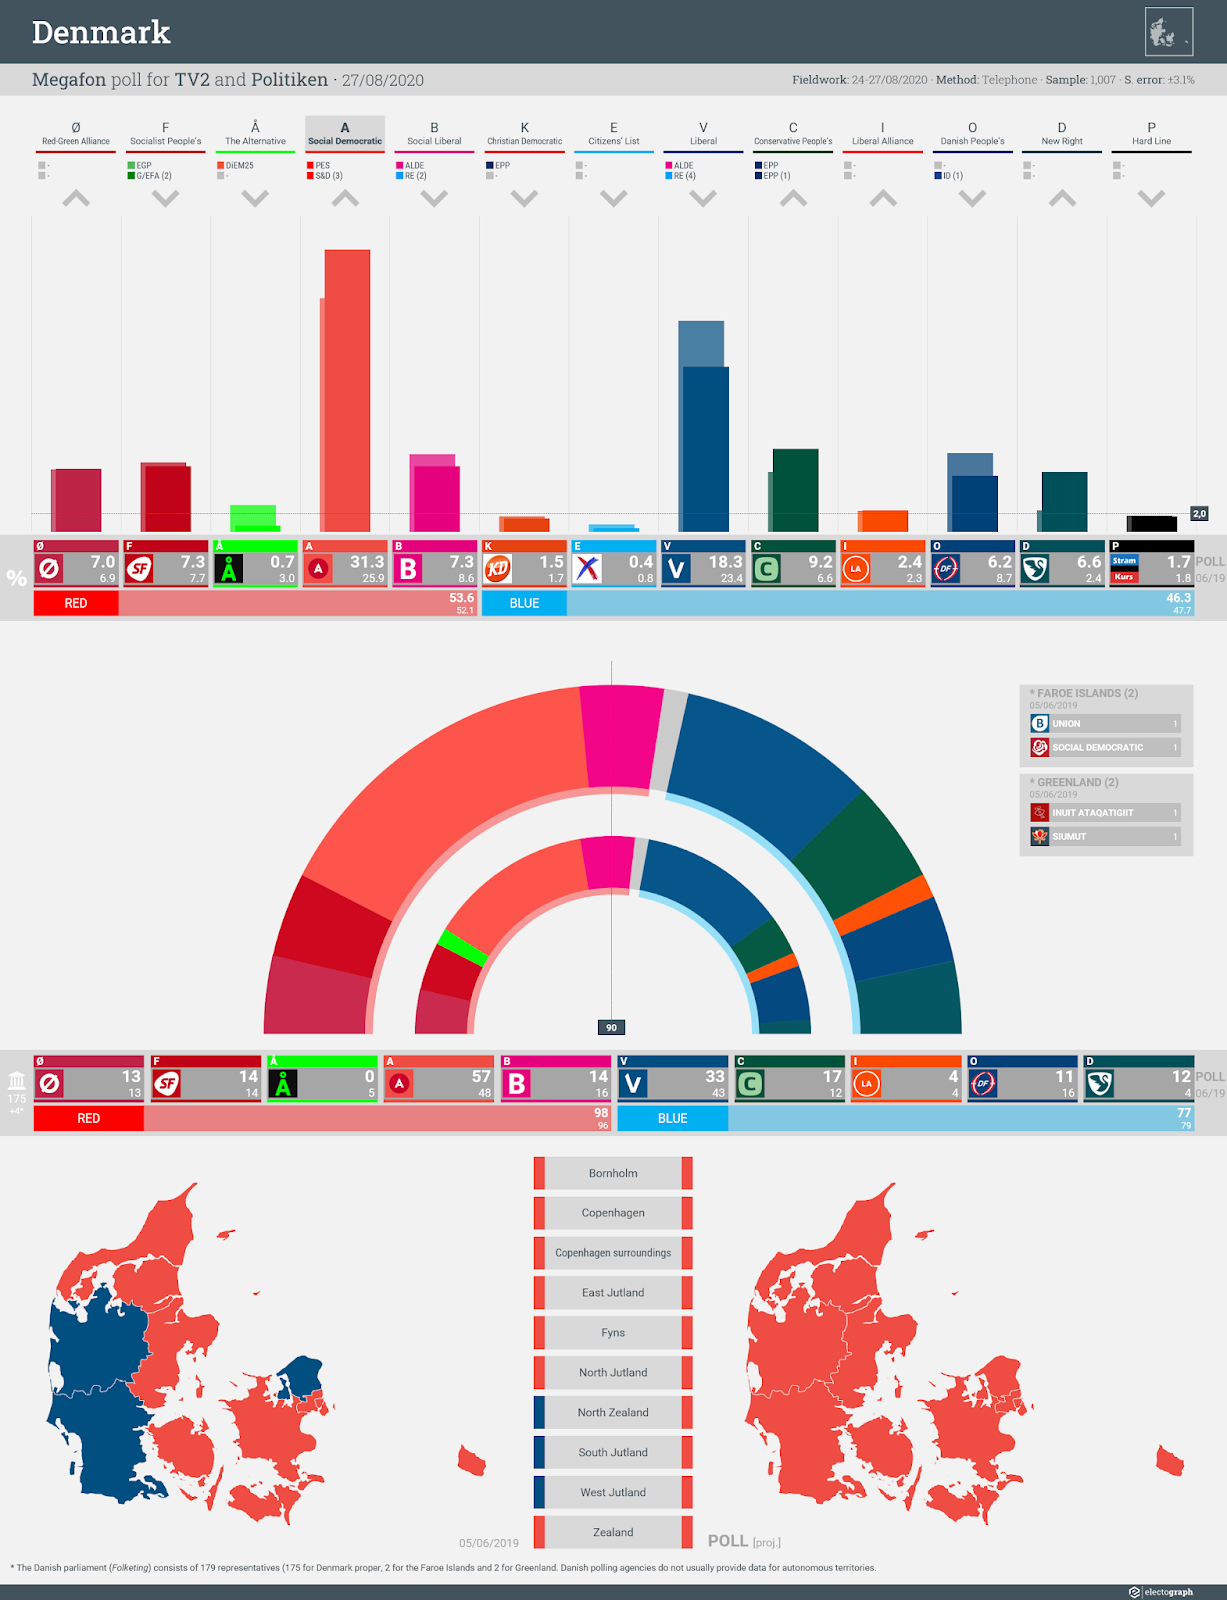 DENMARK: Megafon poll chart for TV2 and Politiken, 27 August 2020